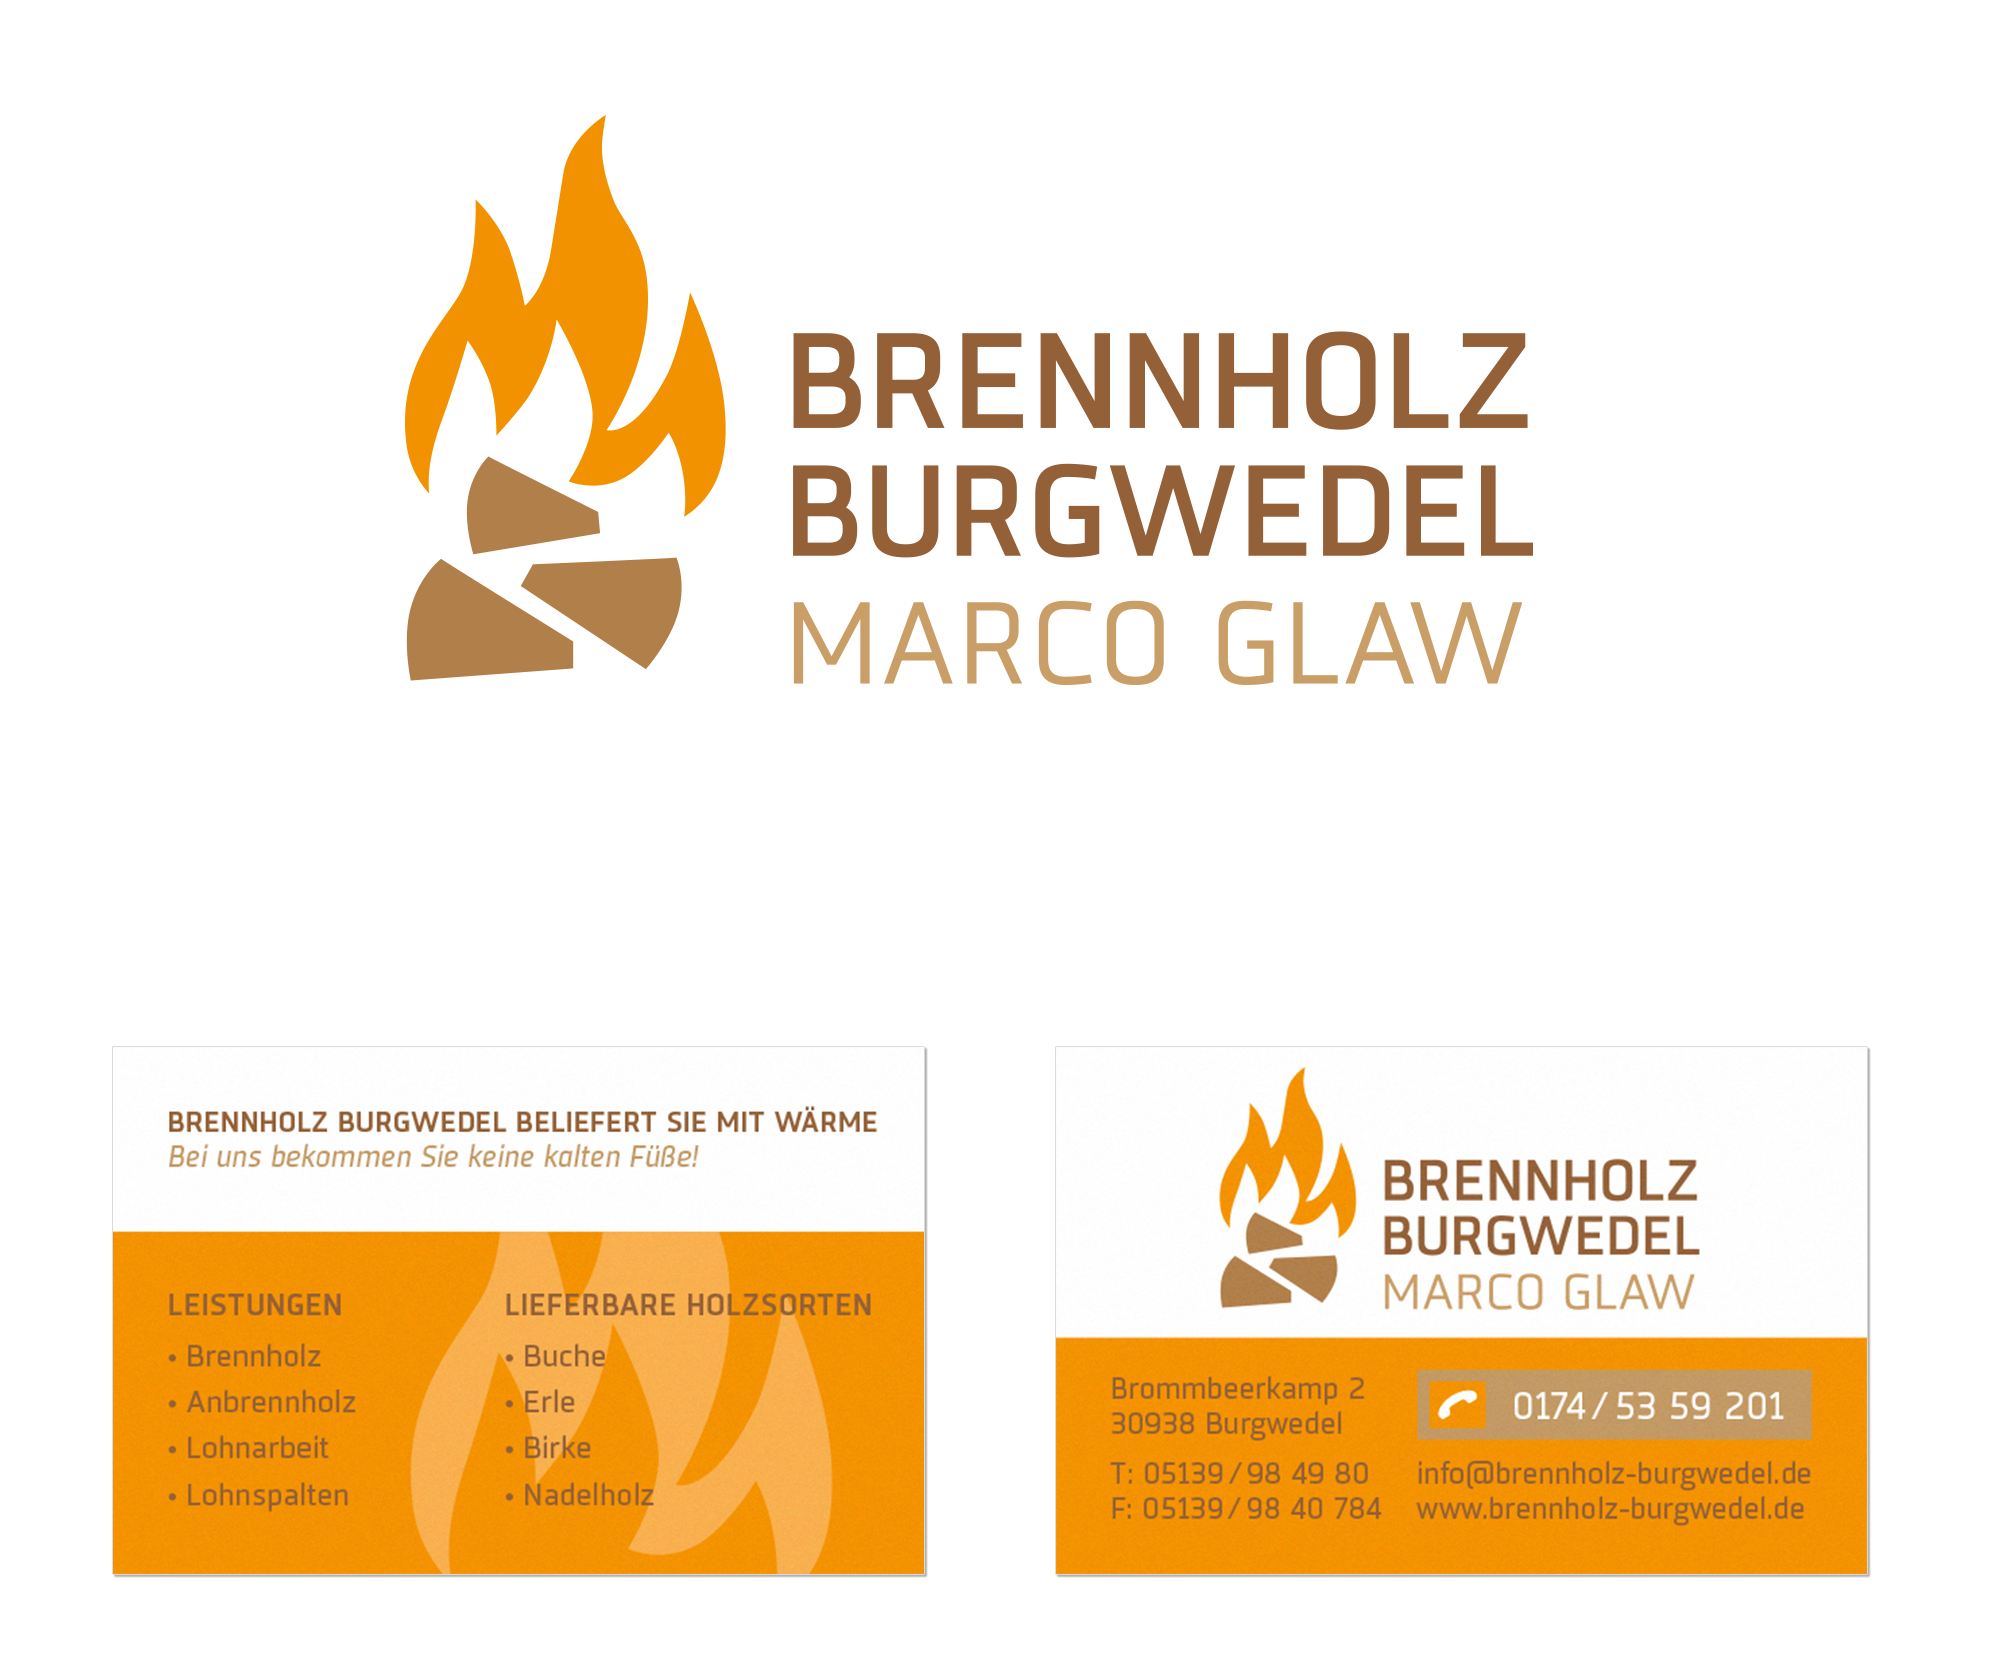 Brennholz Burgwedel Glaw | Corporate Design